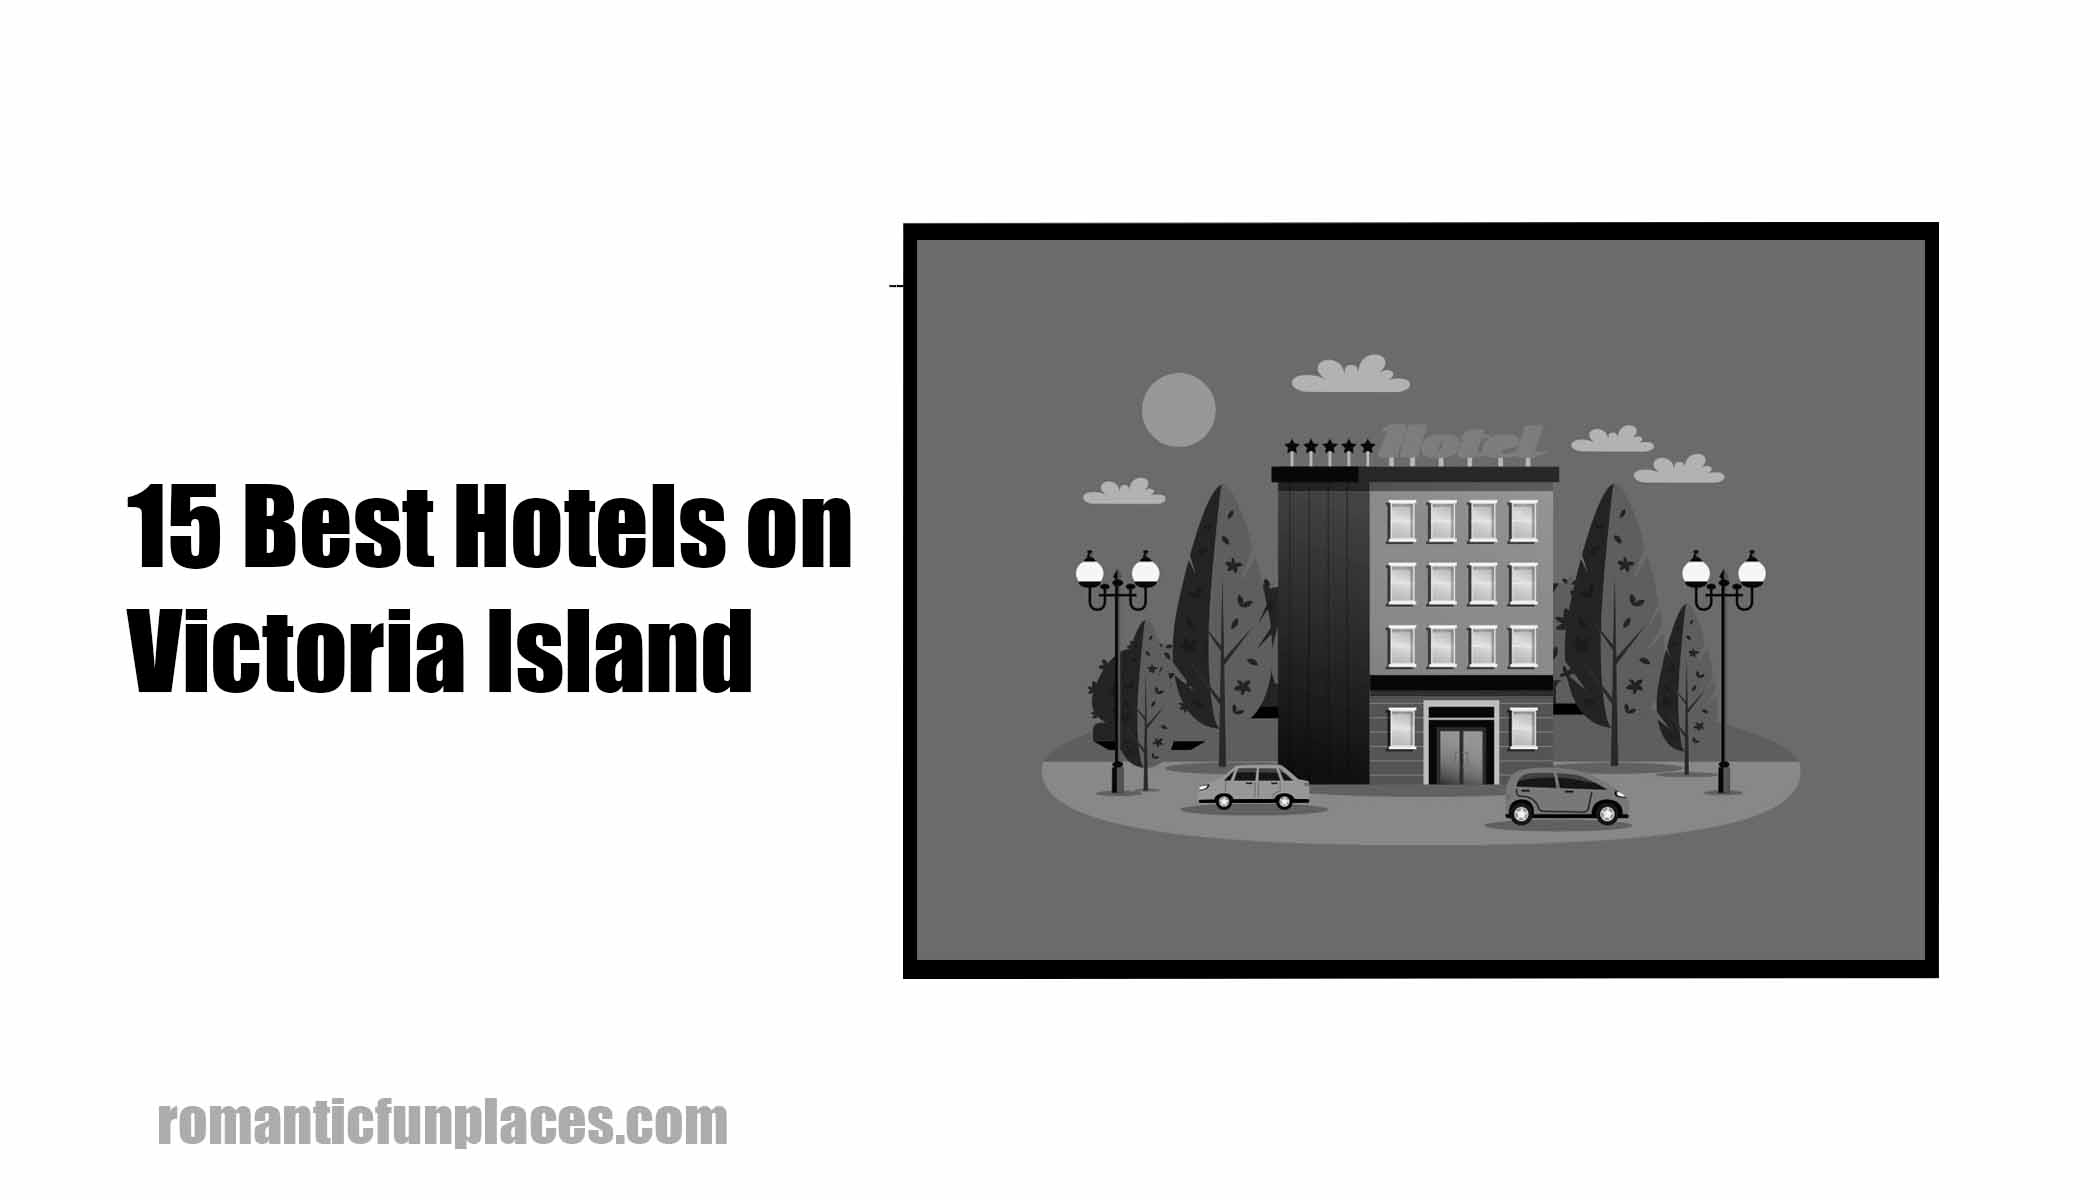 15 Best Hotels on Victoria Island